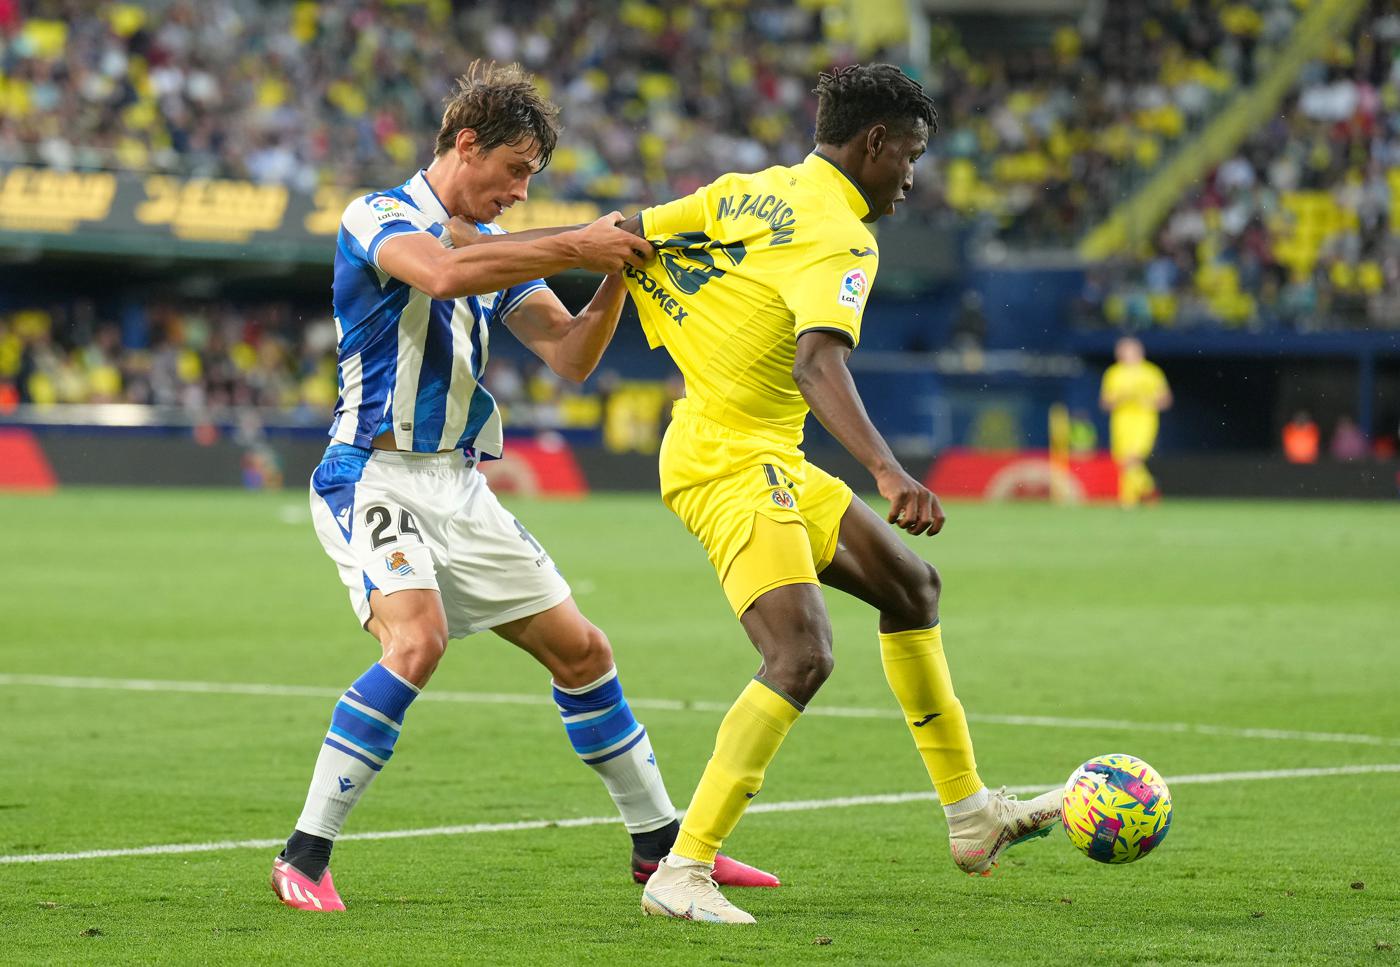 Villarreal - Real S-dad - 2:0. Spanish Championship, 27th round. Match review, statistics